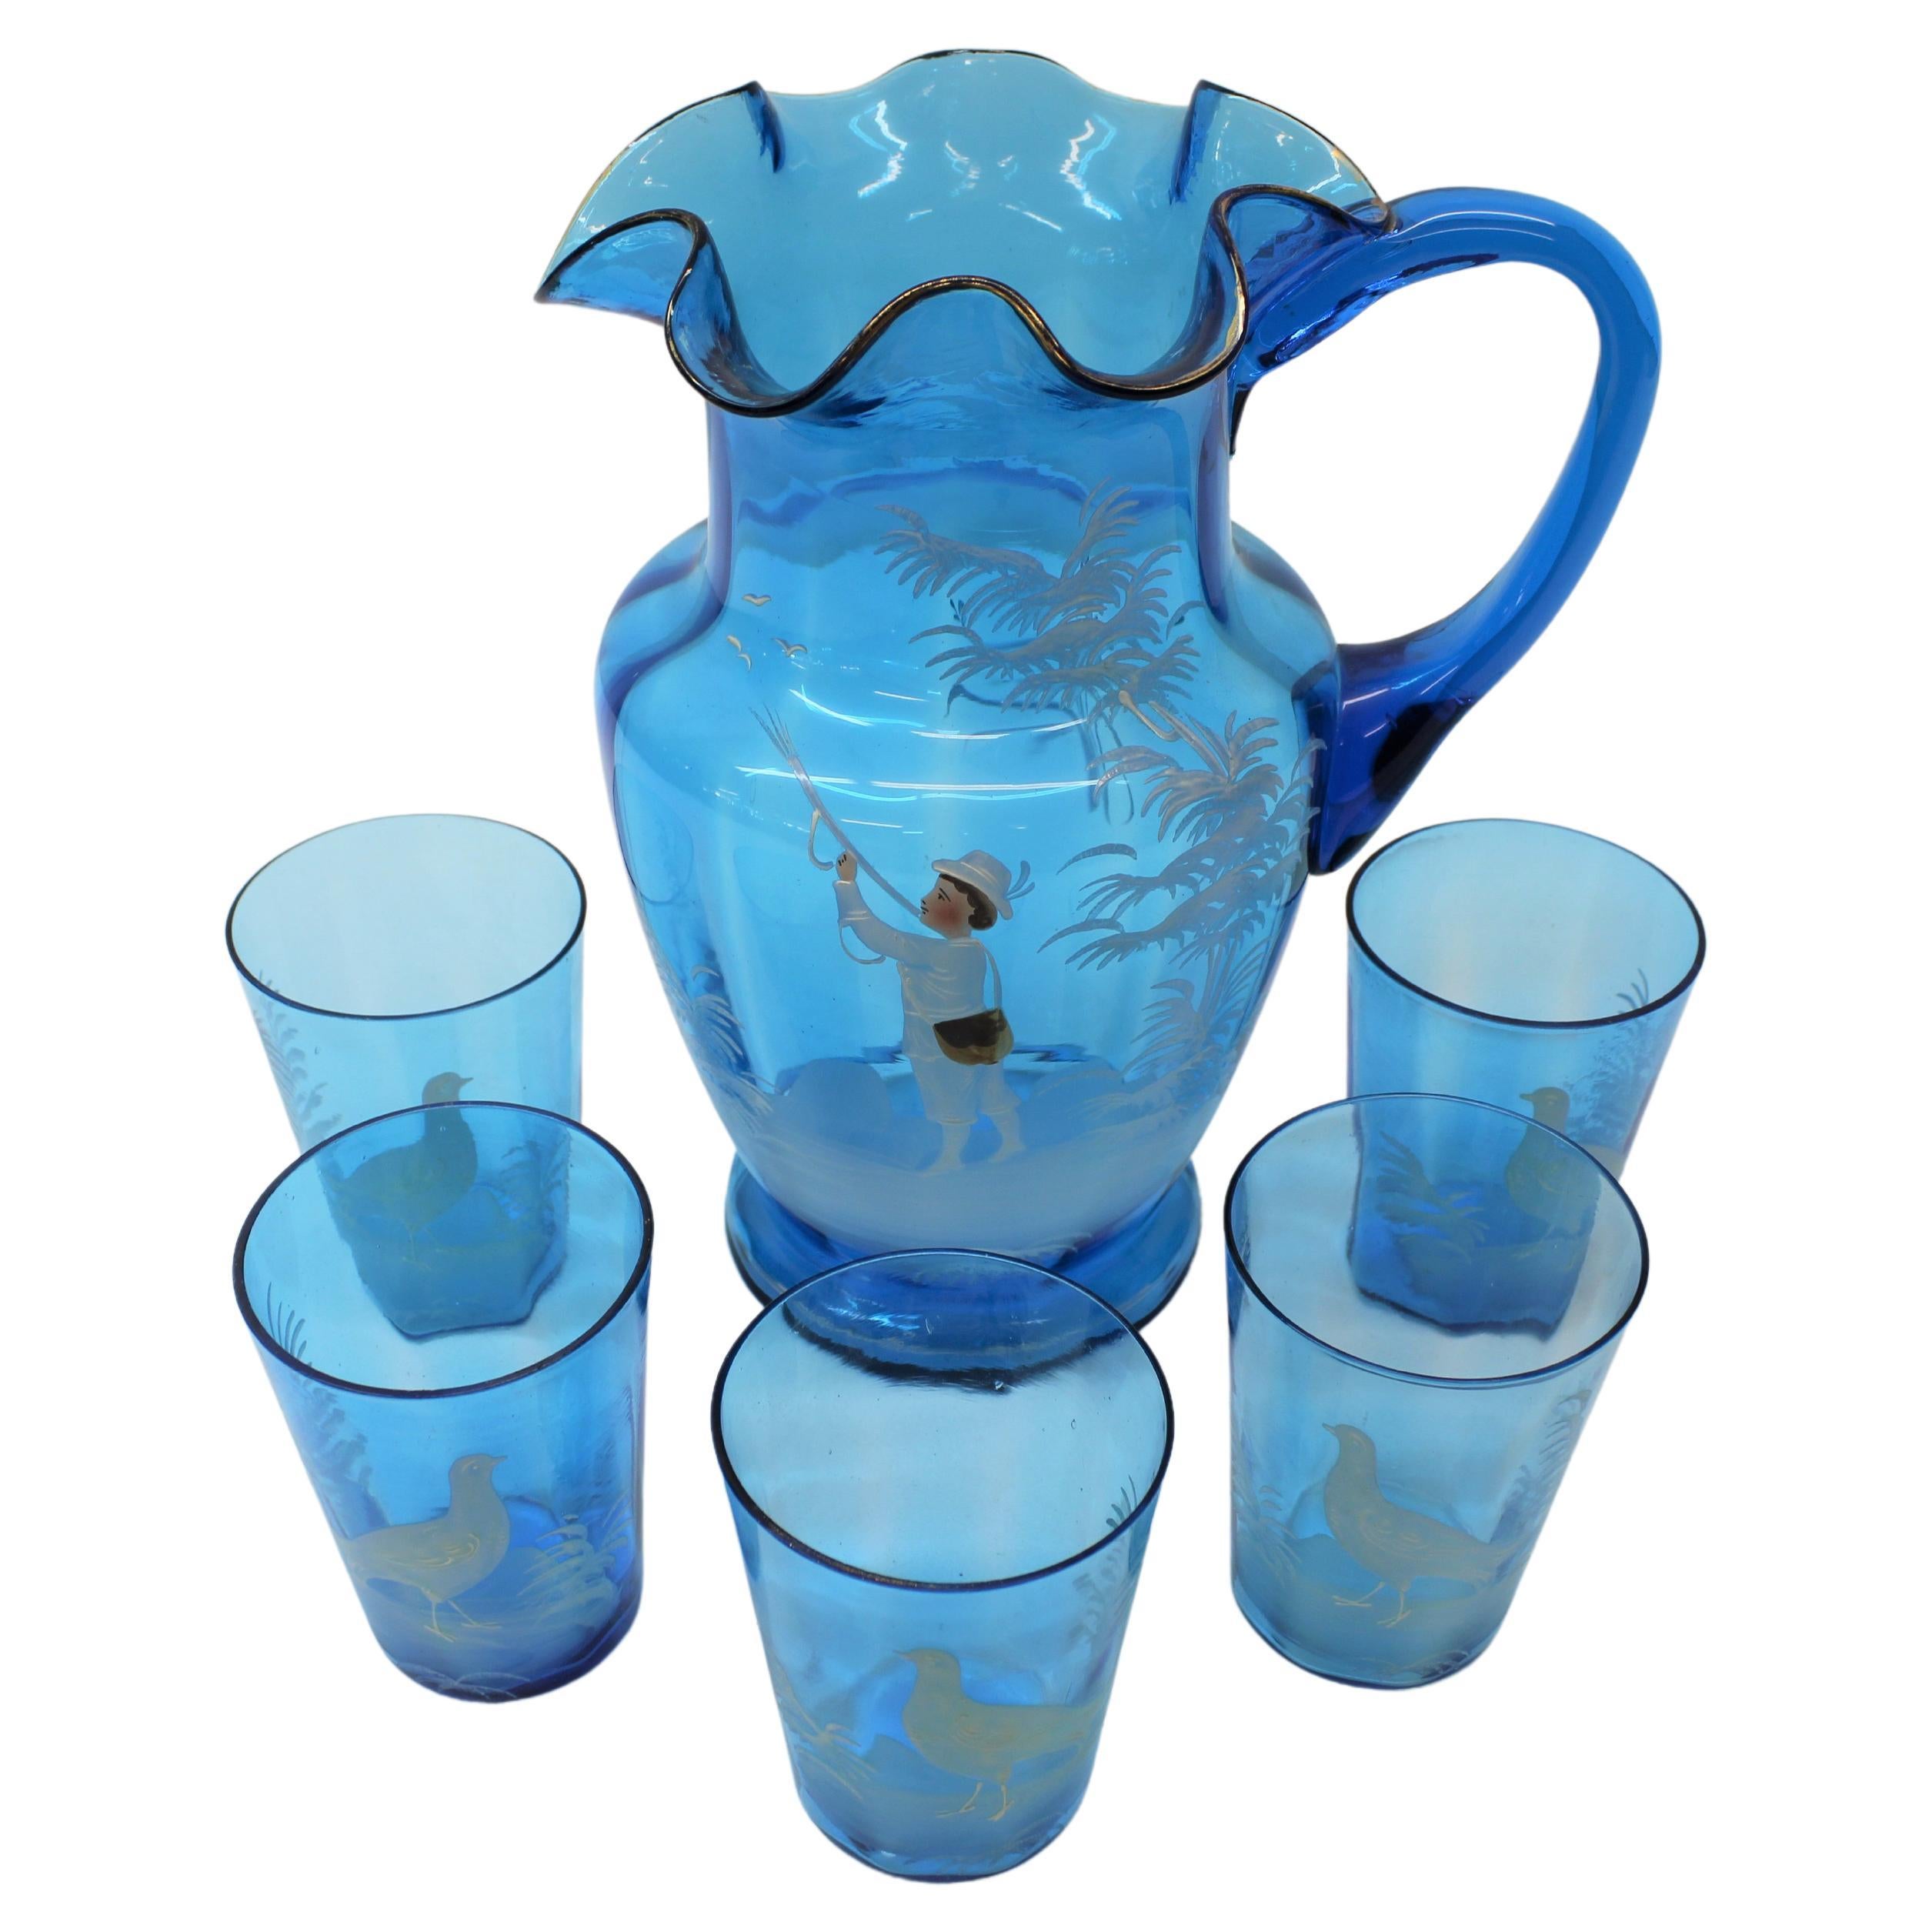 https://a.1stdibscdn.com/victorian-blue-glass-pitcher-w-5-tumblers-for-sale/f_51992/f_260087221636158489286/f_26008722_1636158490337_bg_processed.jpg